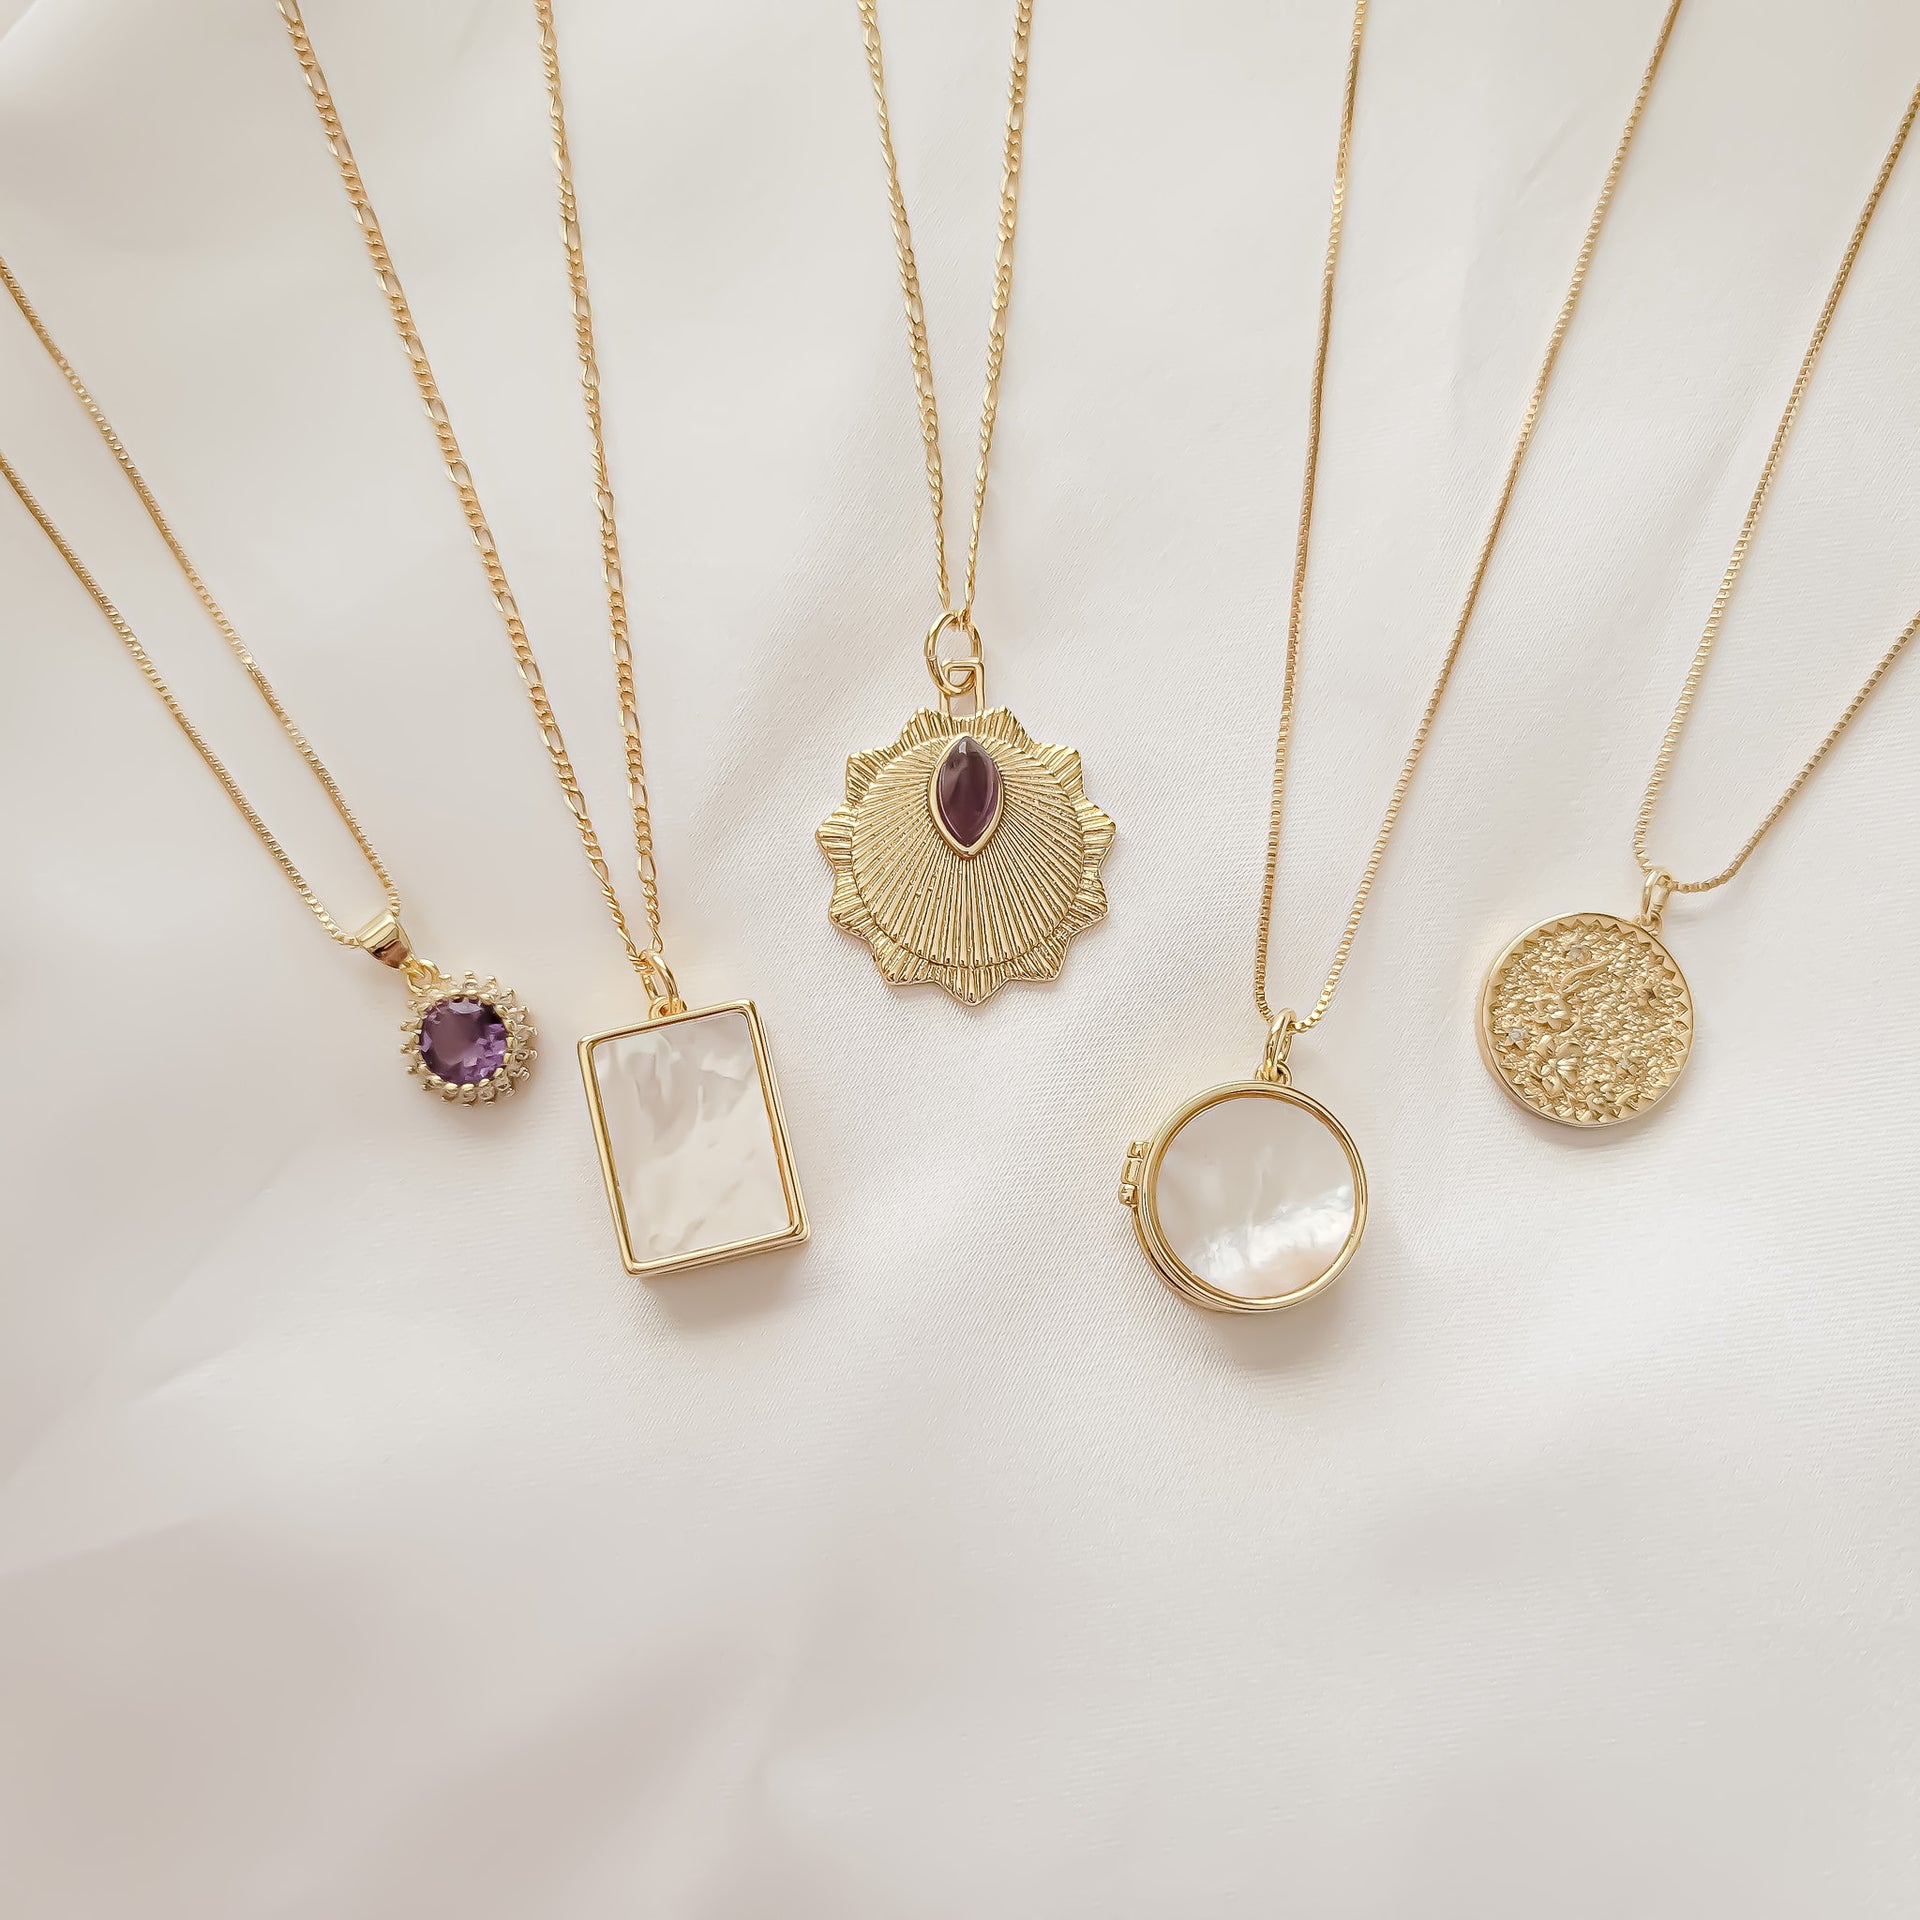 Elements by Kristina | Gold filled jewelry – elementsbykristina